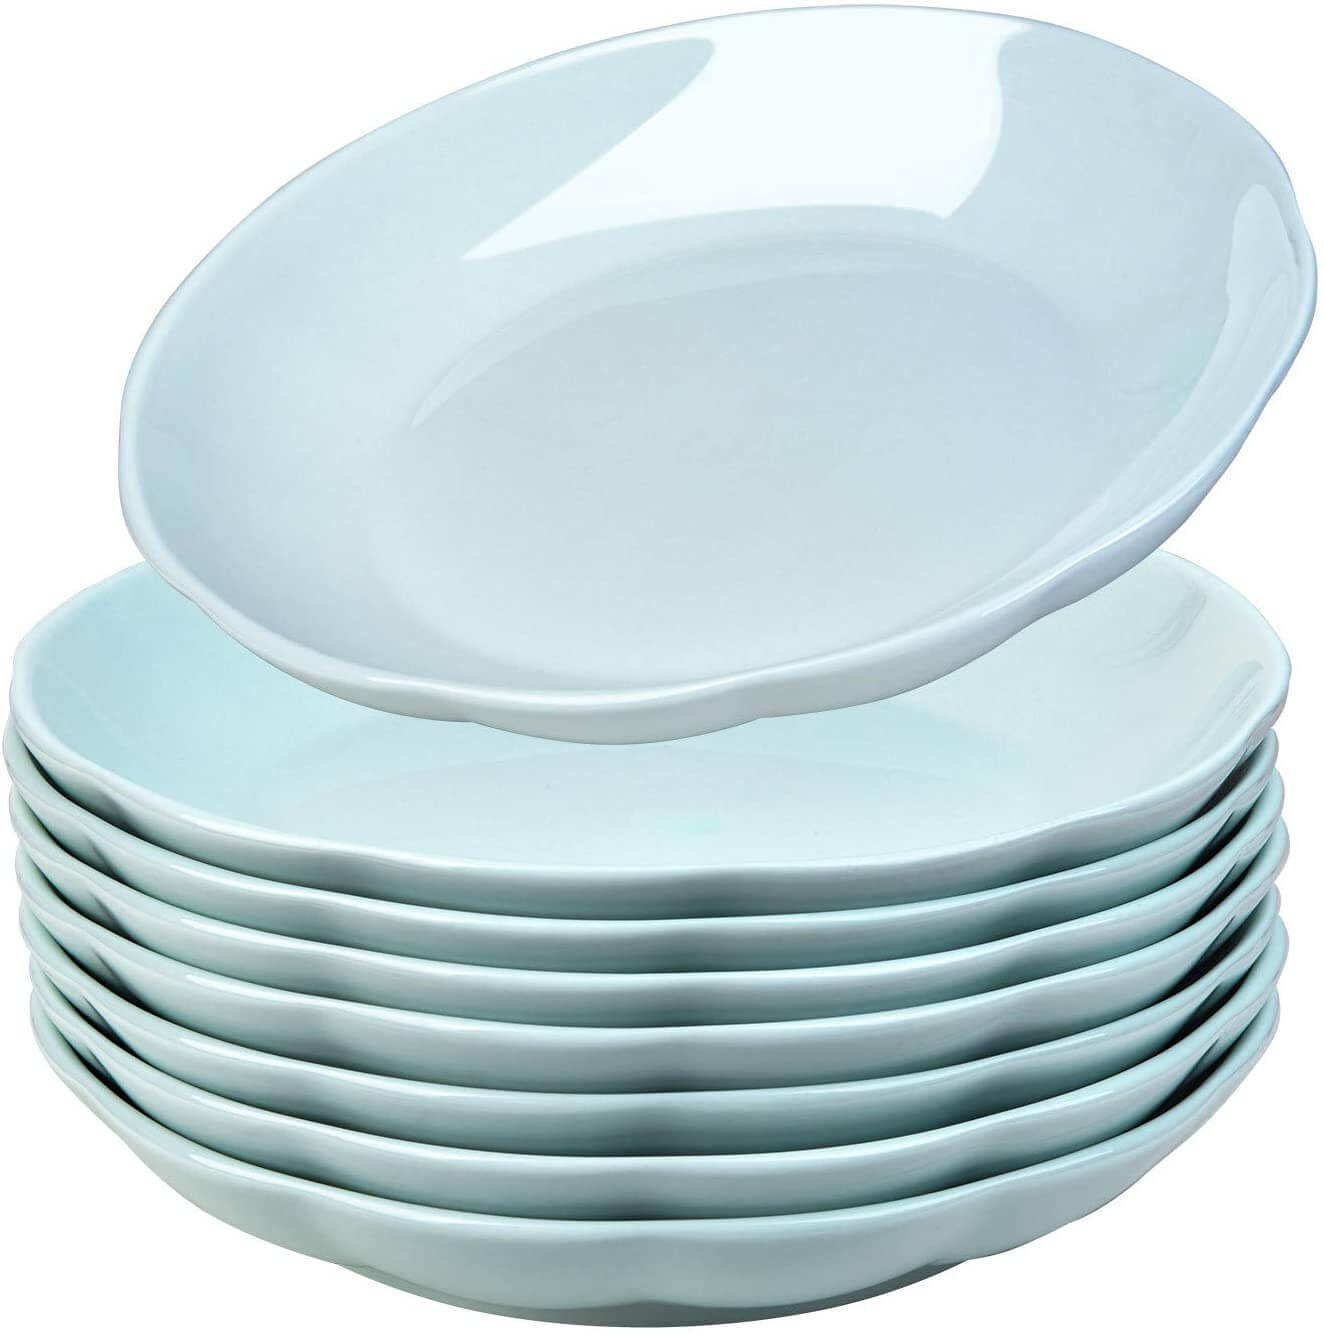 AnBnCn Porcelain Shallow Pasta and Salad Bowls